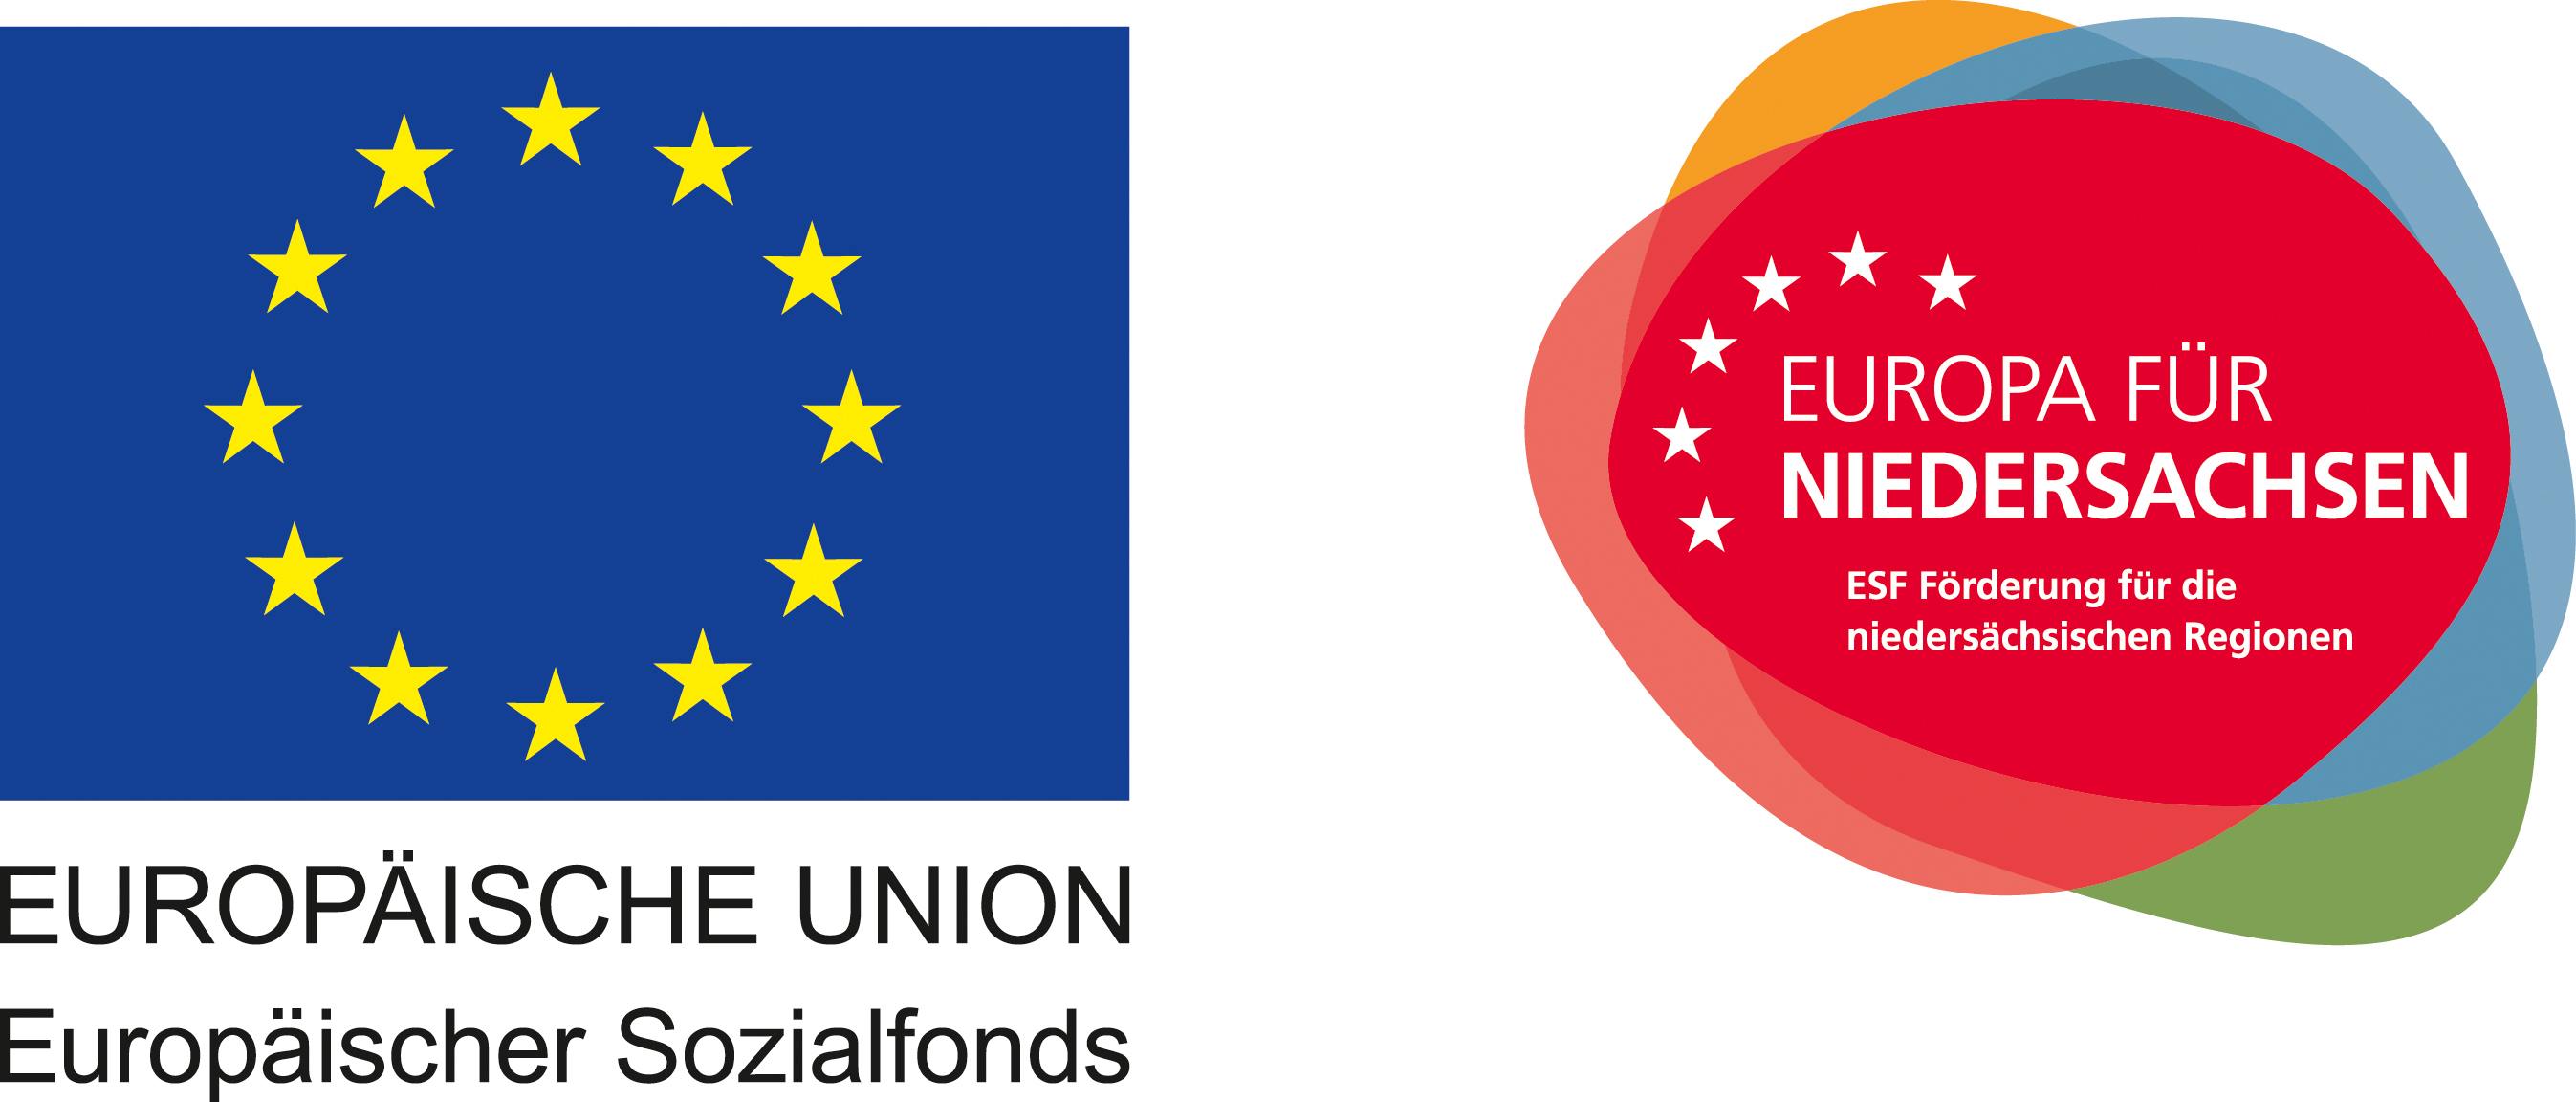 Flagge Europäische Union Europäischer Sozialfonds